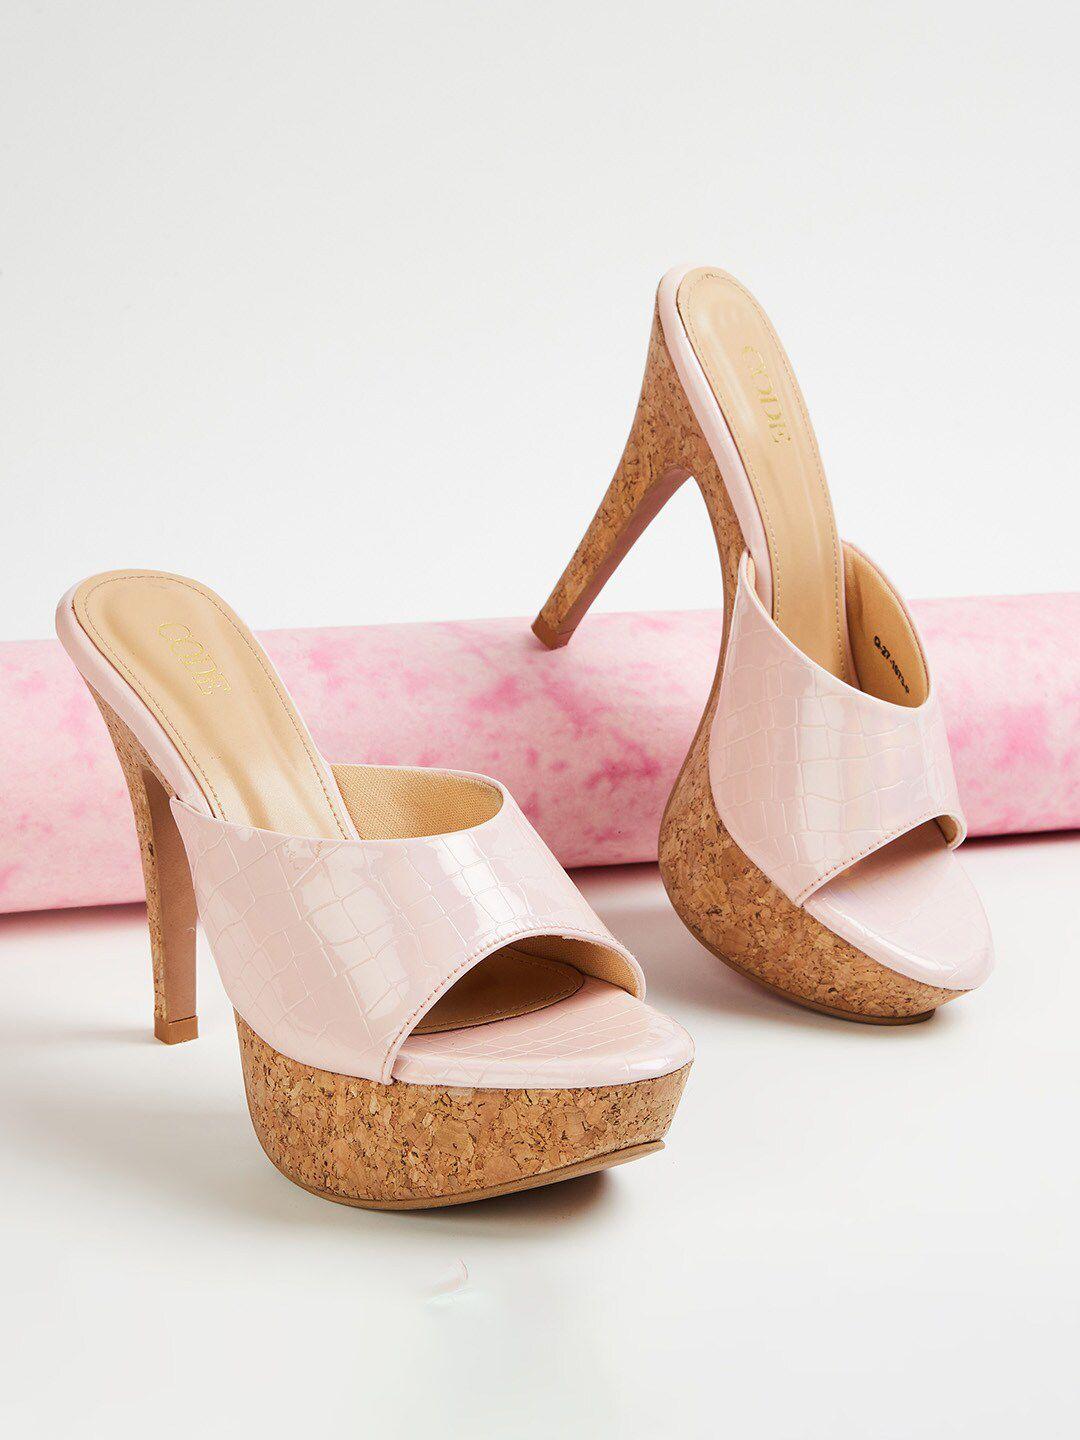 code by lifestyle textured stiletto heels